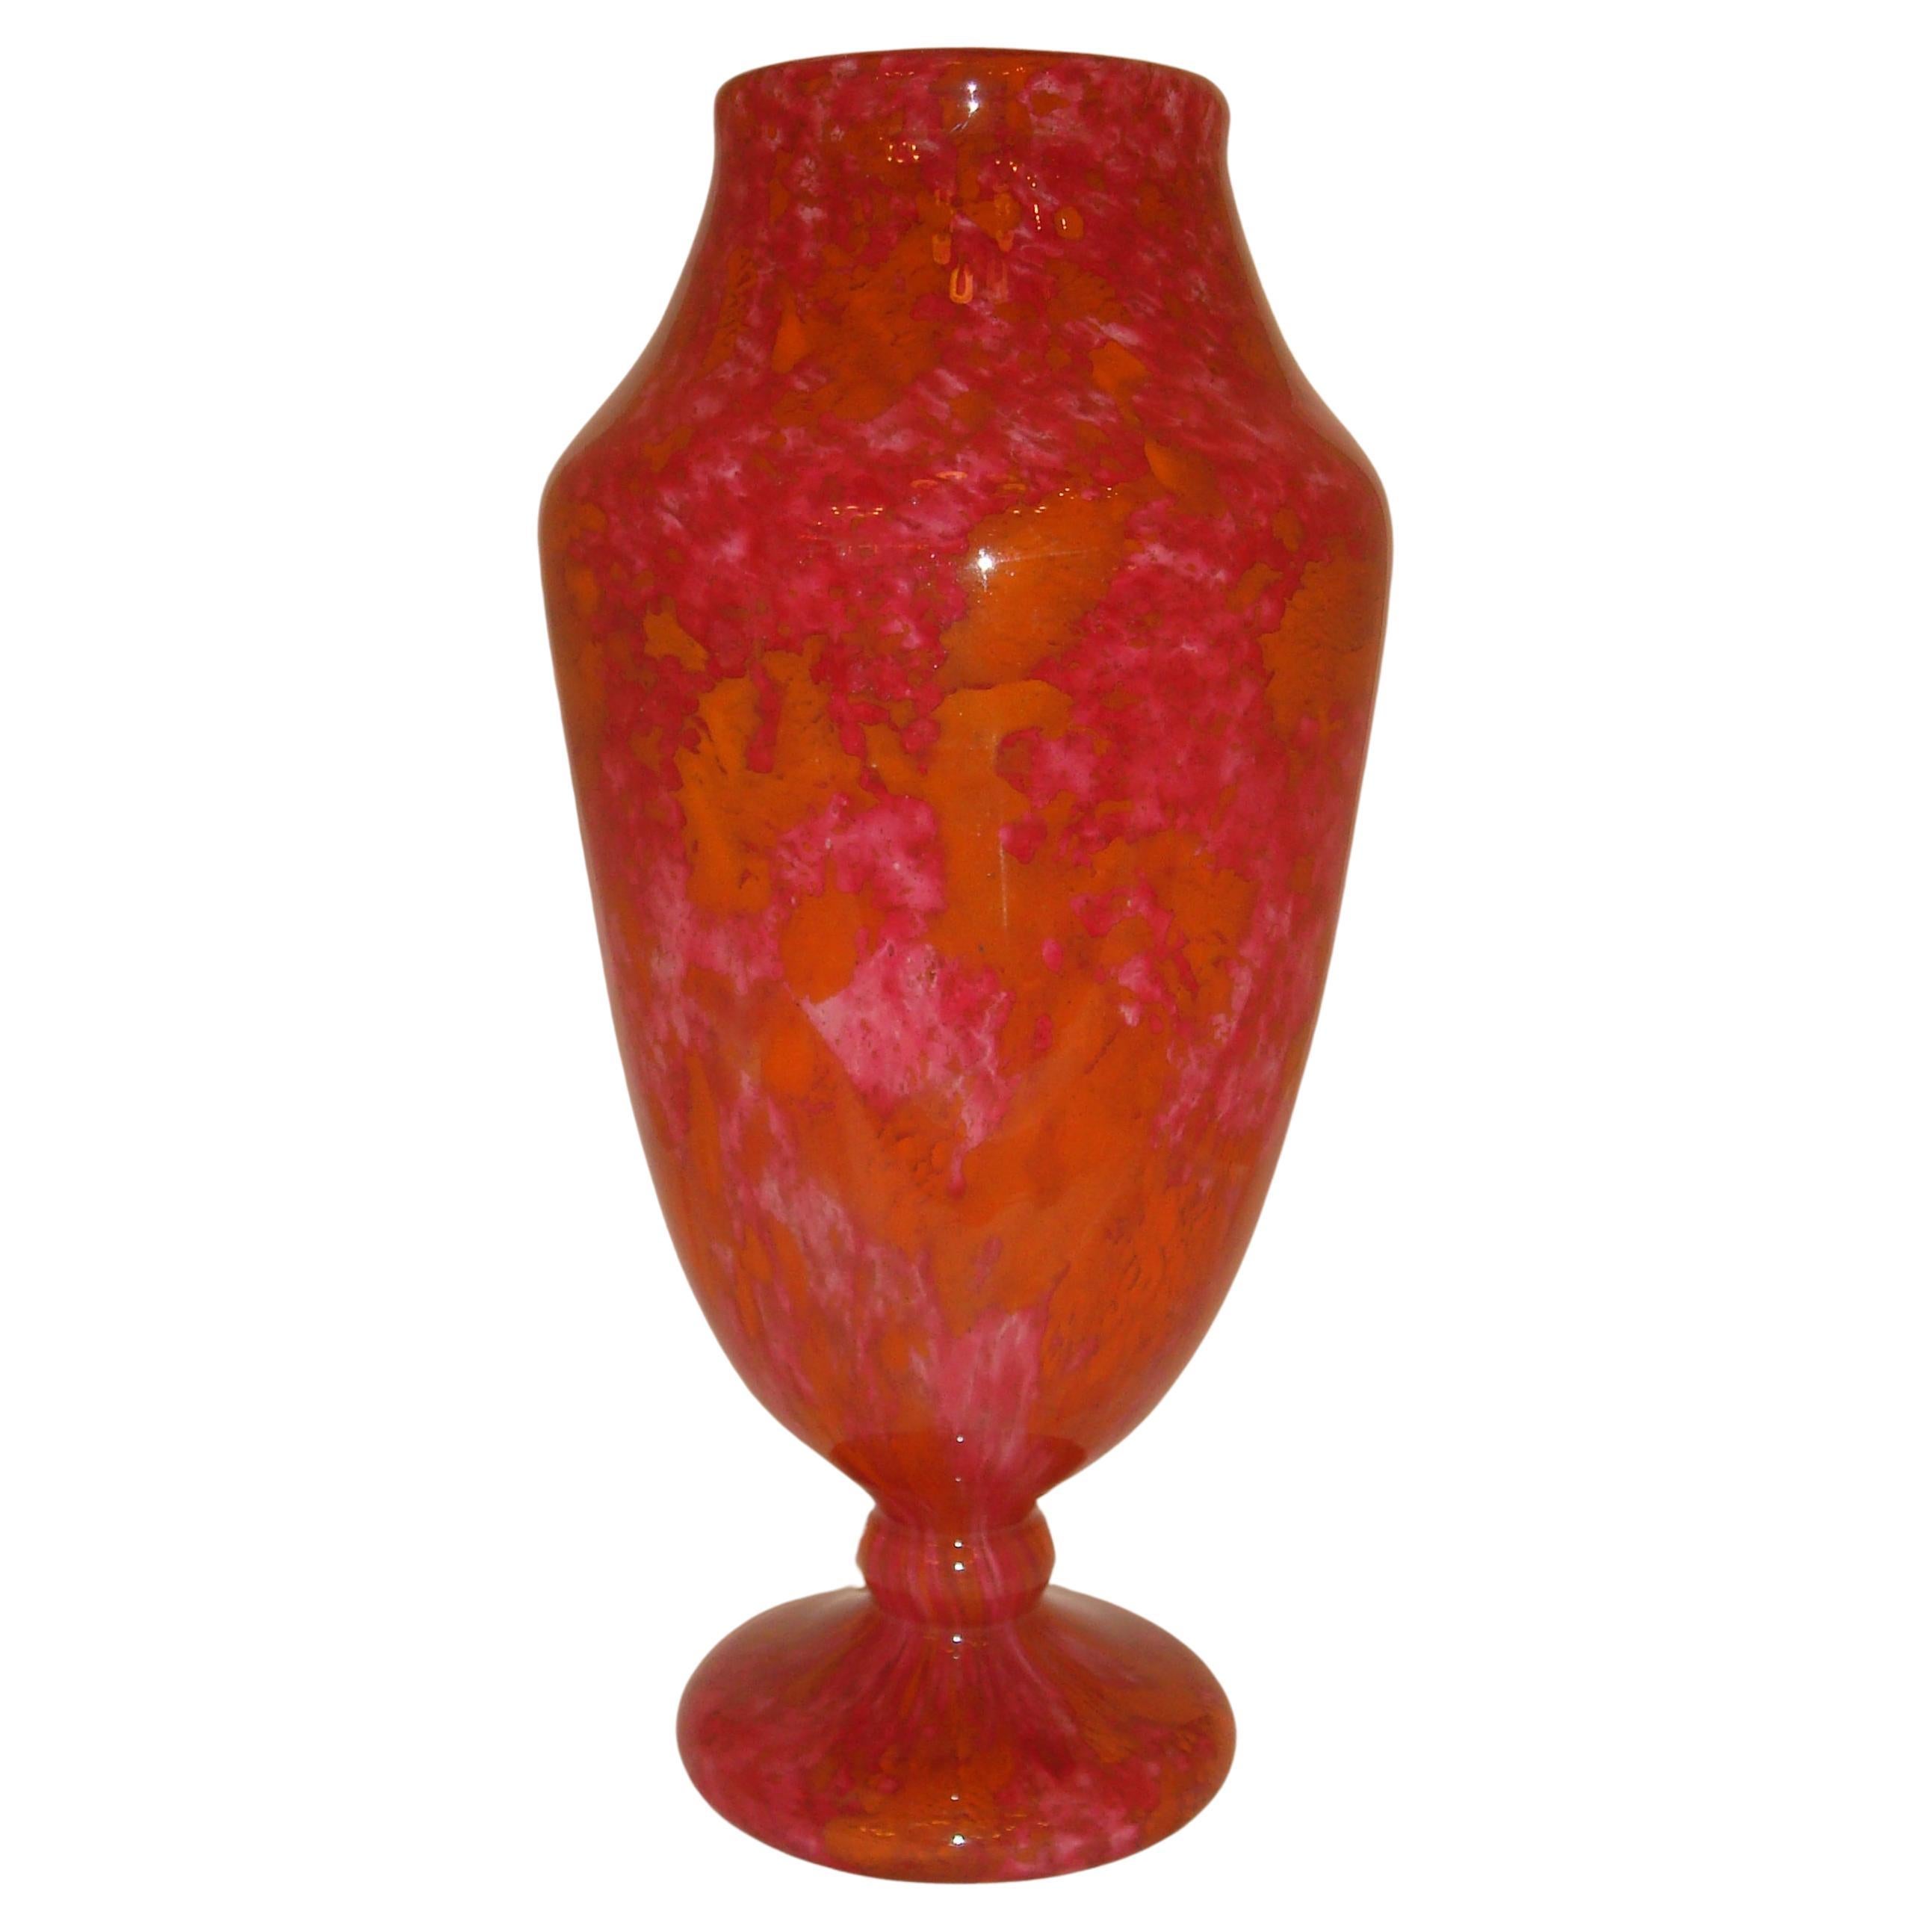 Signature du vase : Schneider ( Décoration Jade), France, avec application, 1924